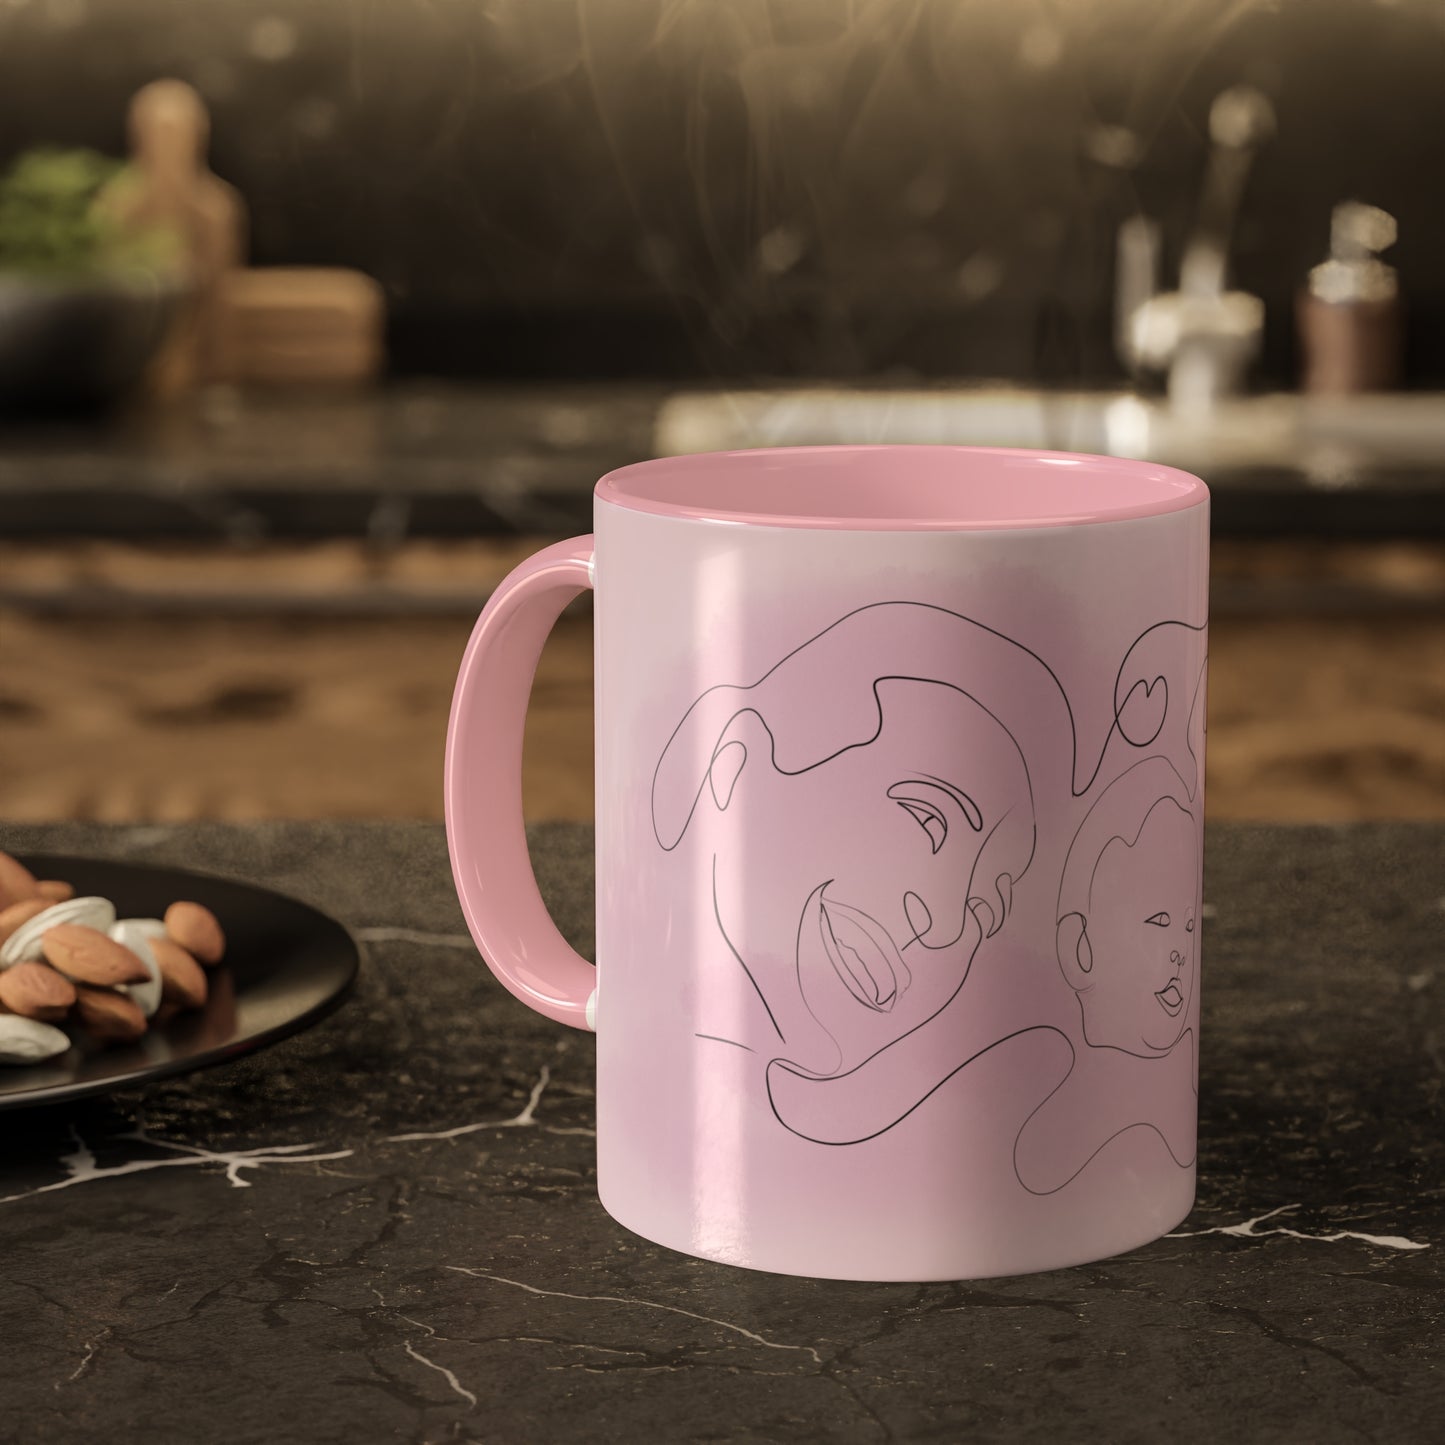 Personalize your Mug